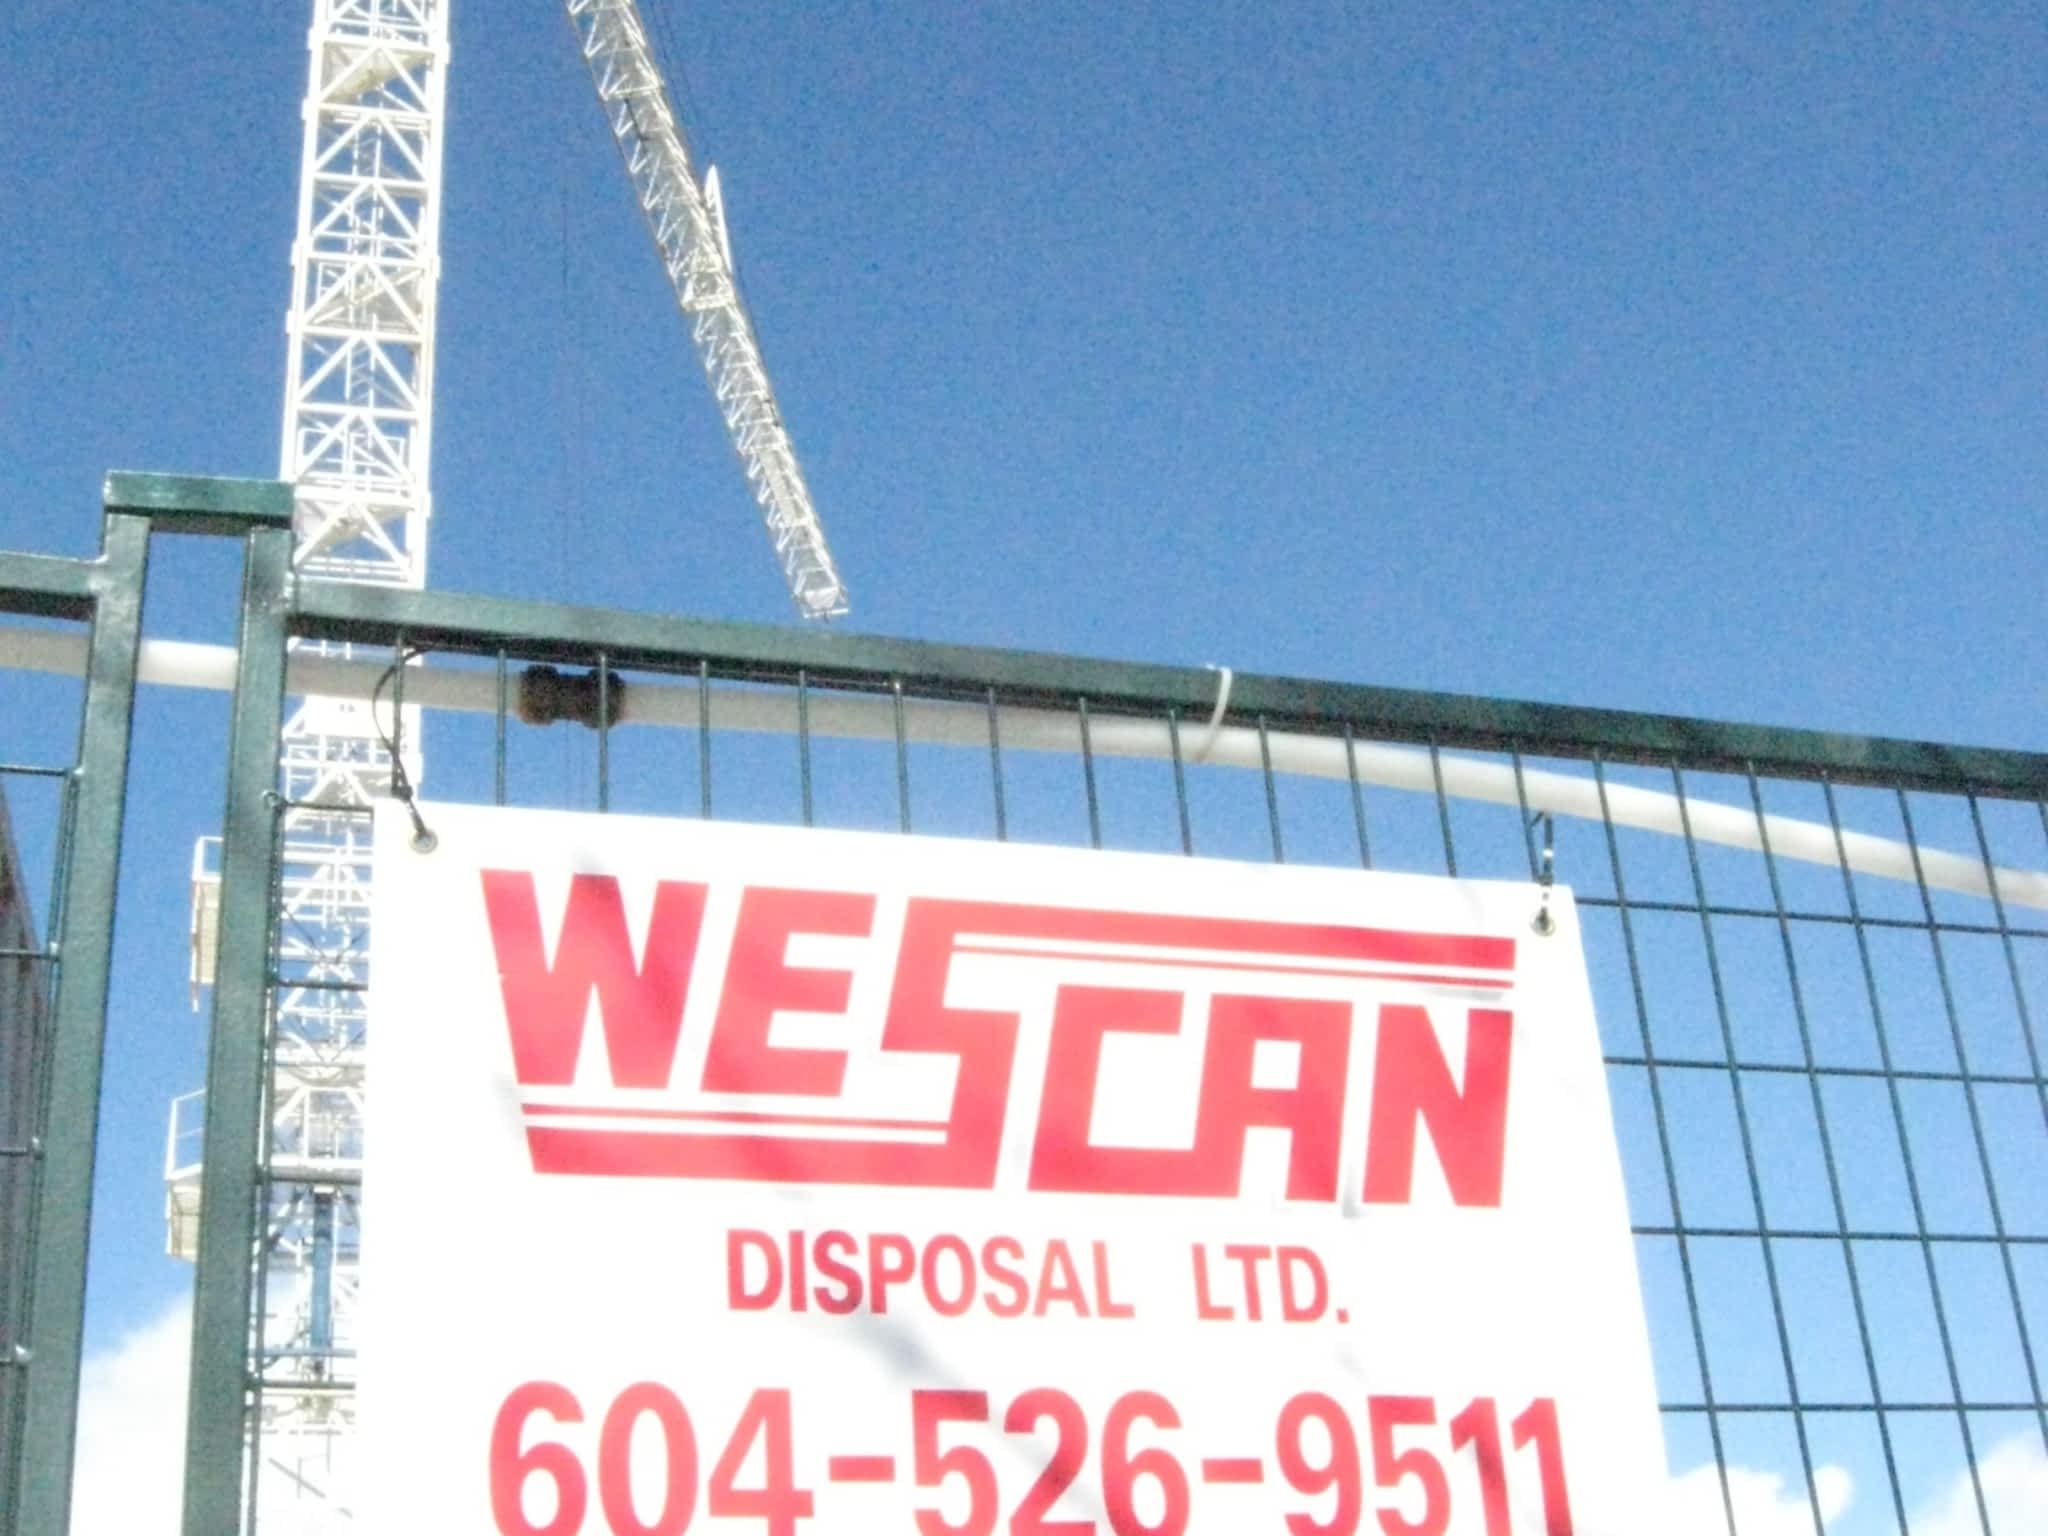 photo Wescan Disposal Ltd